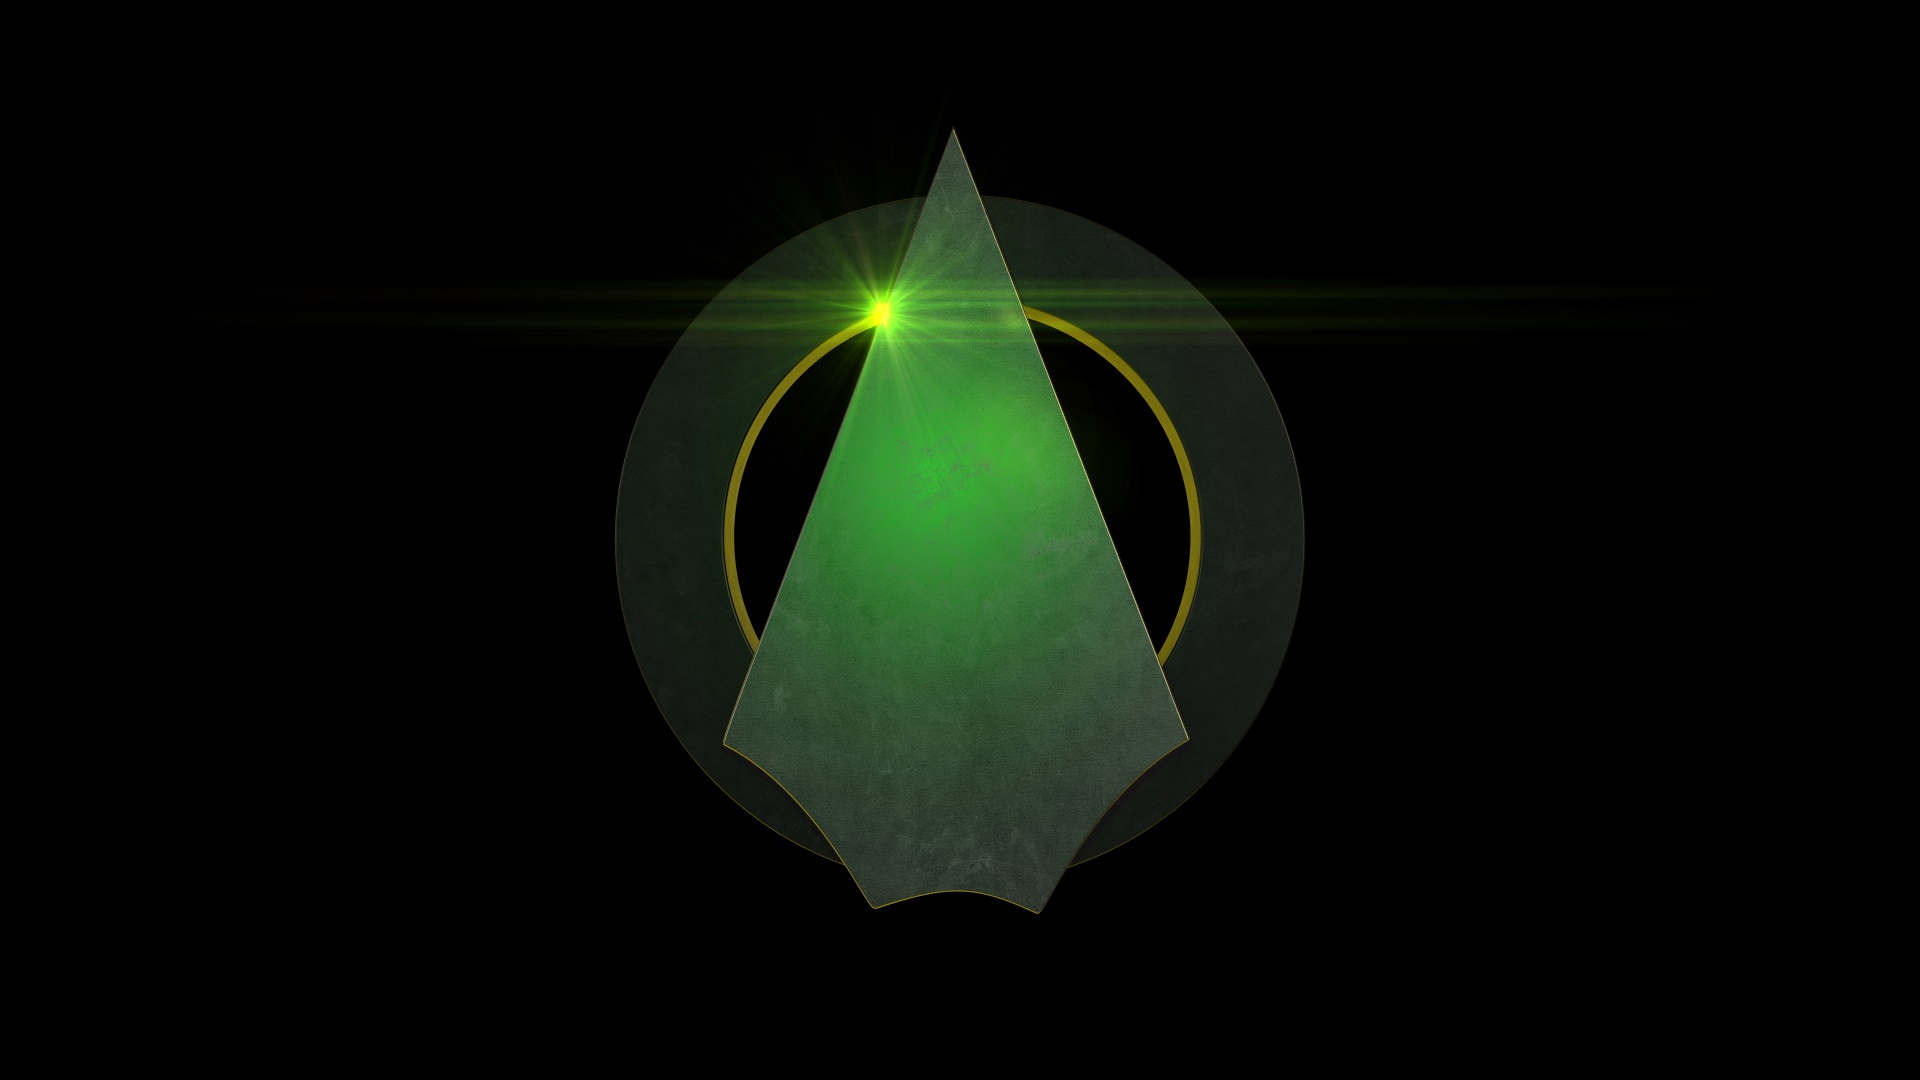 1080p Green Arrow Desktop Wallpaper